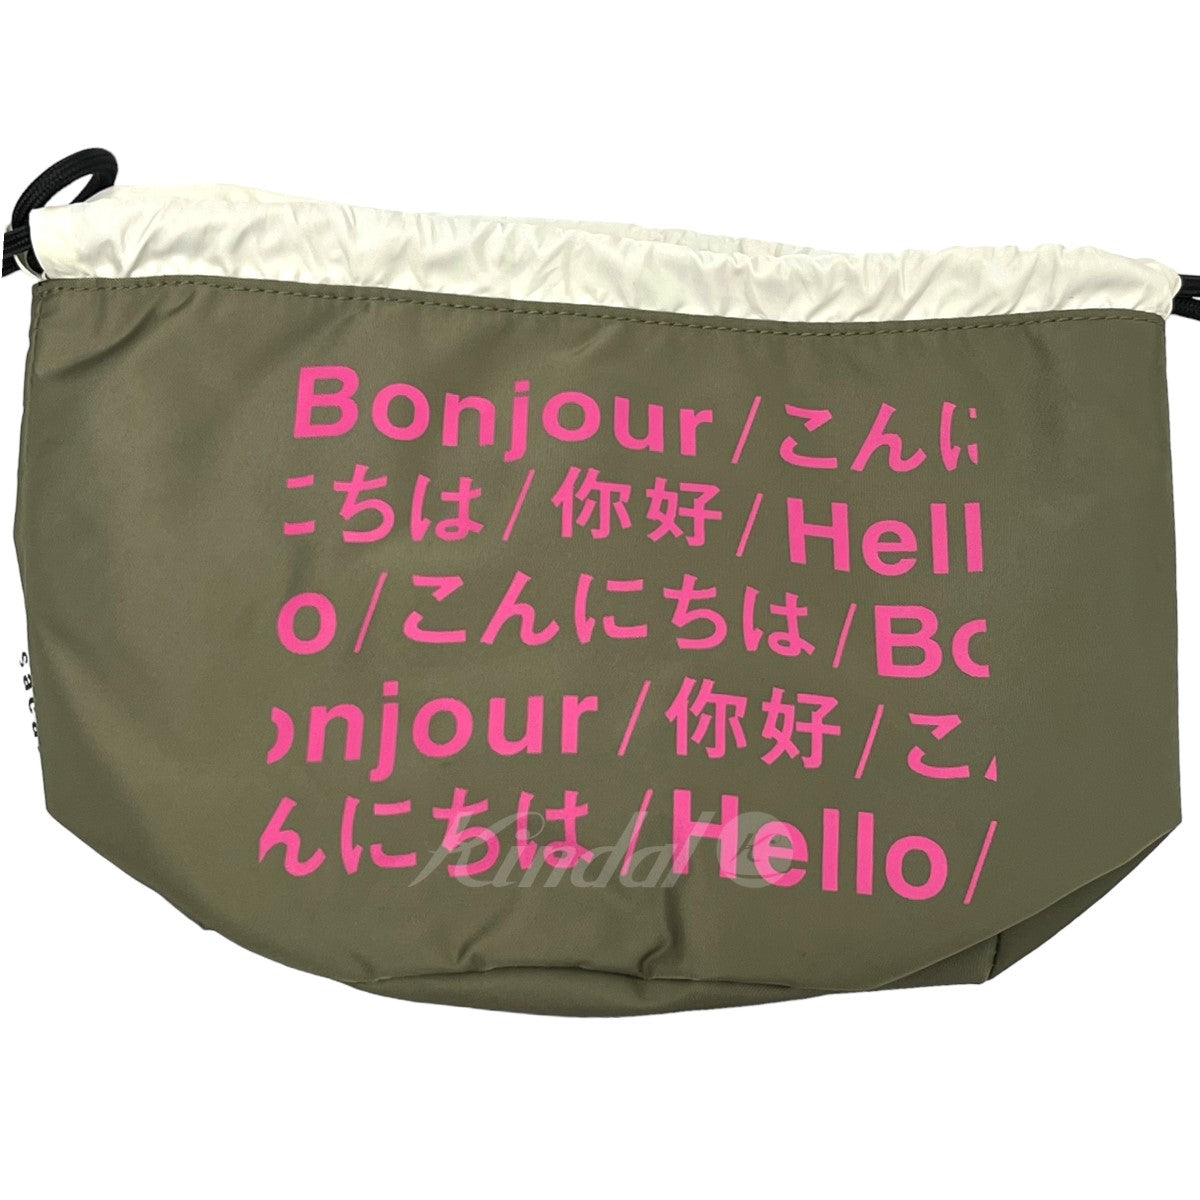 sacai(サカイ) Hello sacai限定 リバーシブル巾着ショルダーバッグ